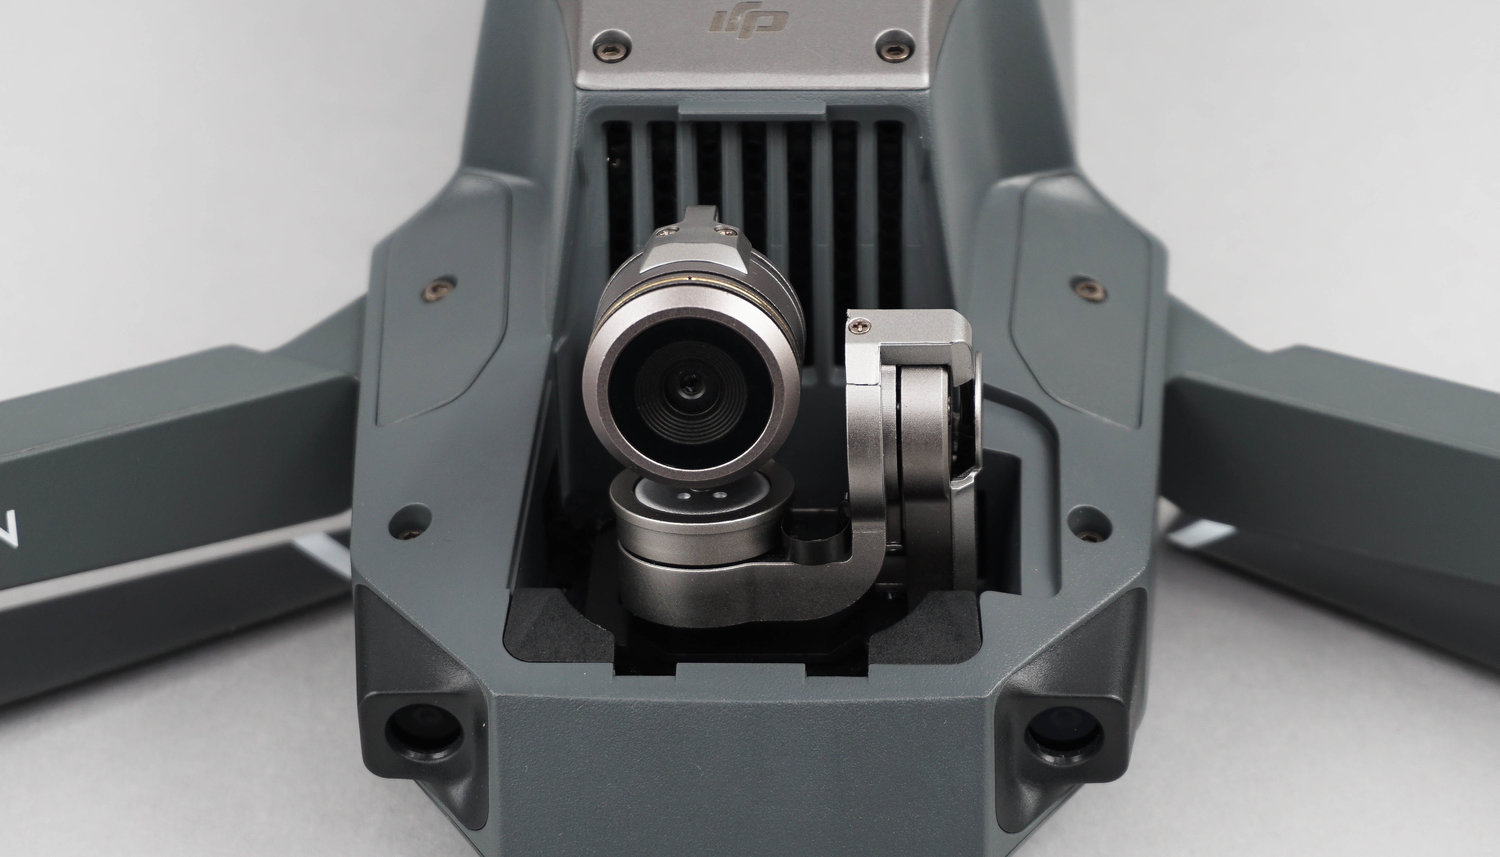 The Mavic's 4K camera features a high precision 3-axis gimbal 